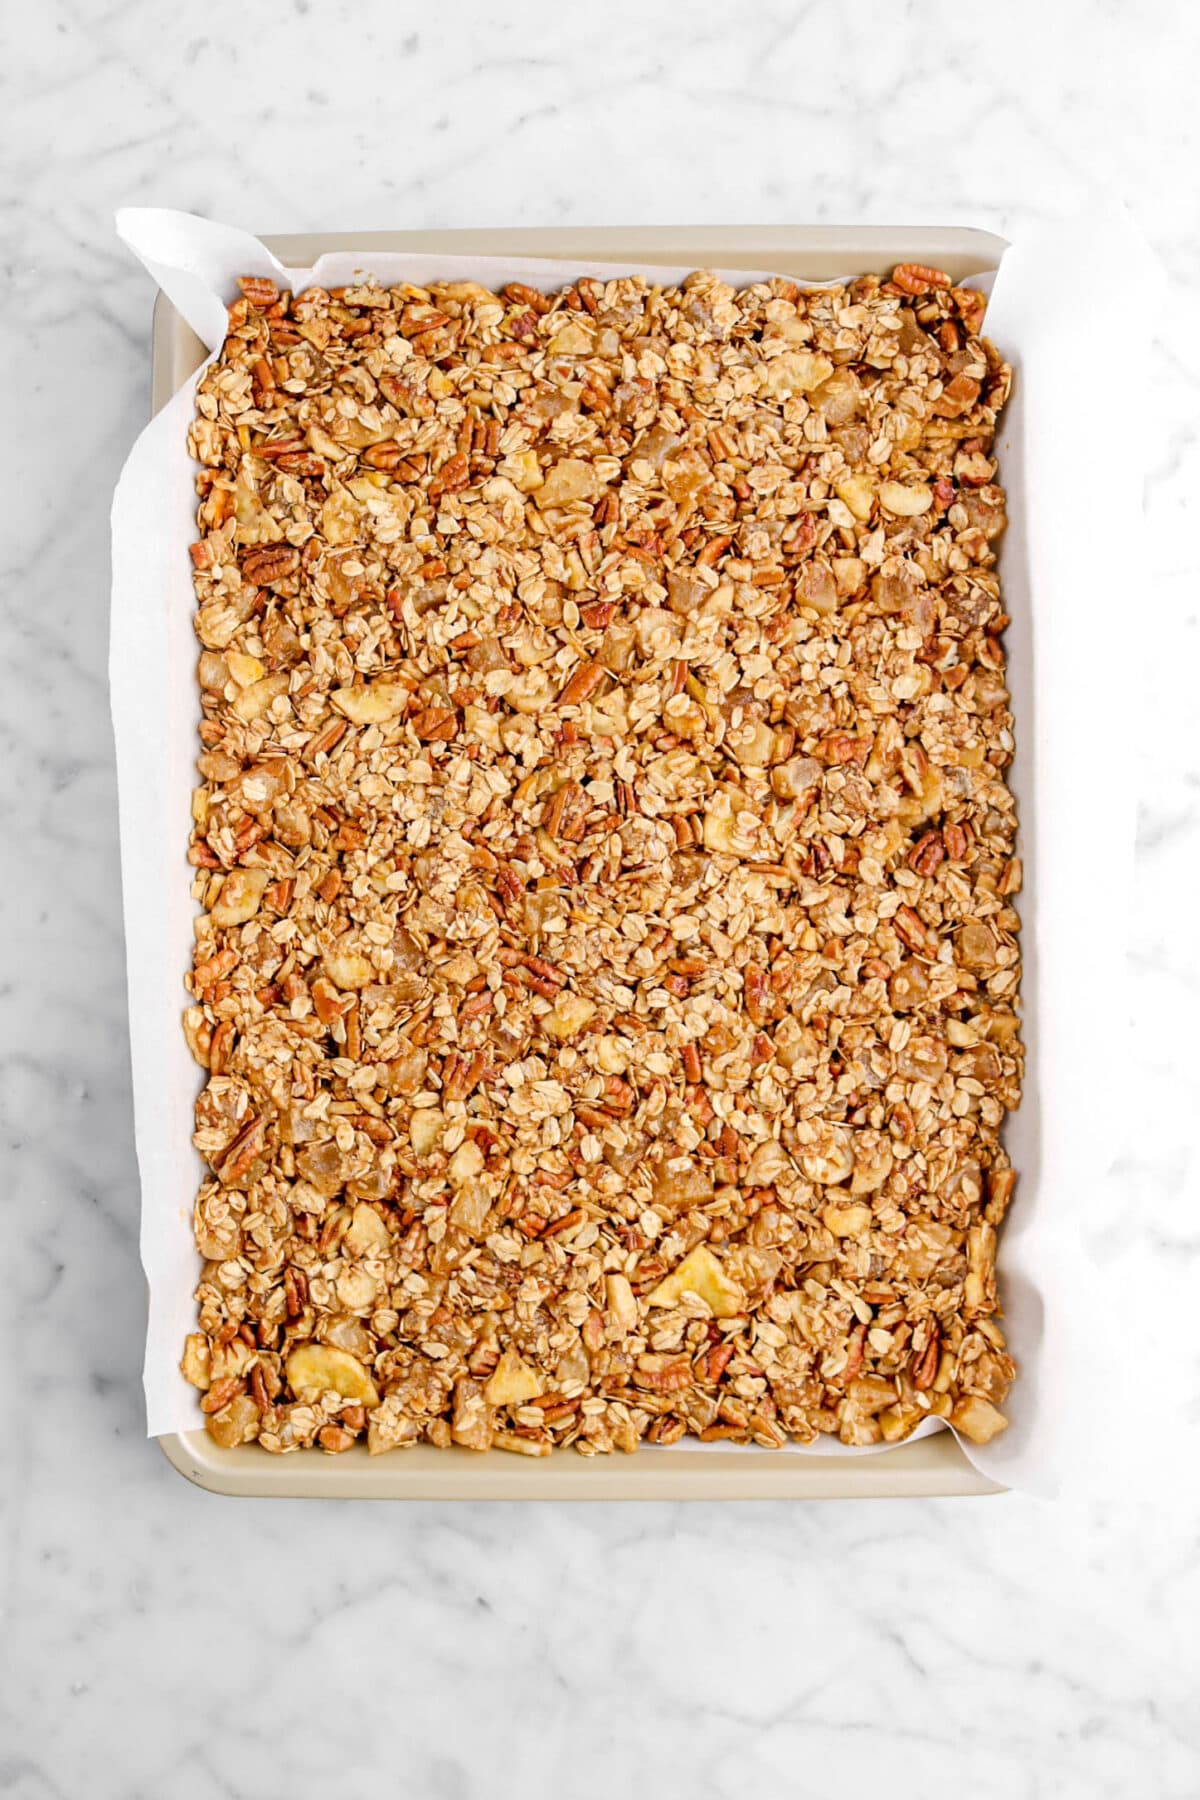 granola compacted down on sheet pan